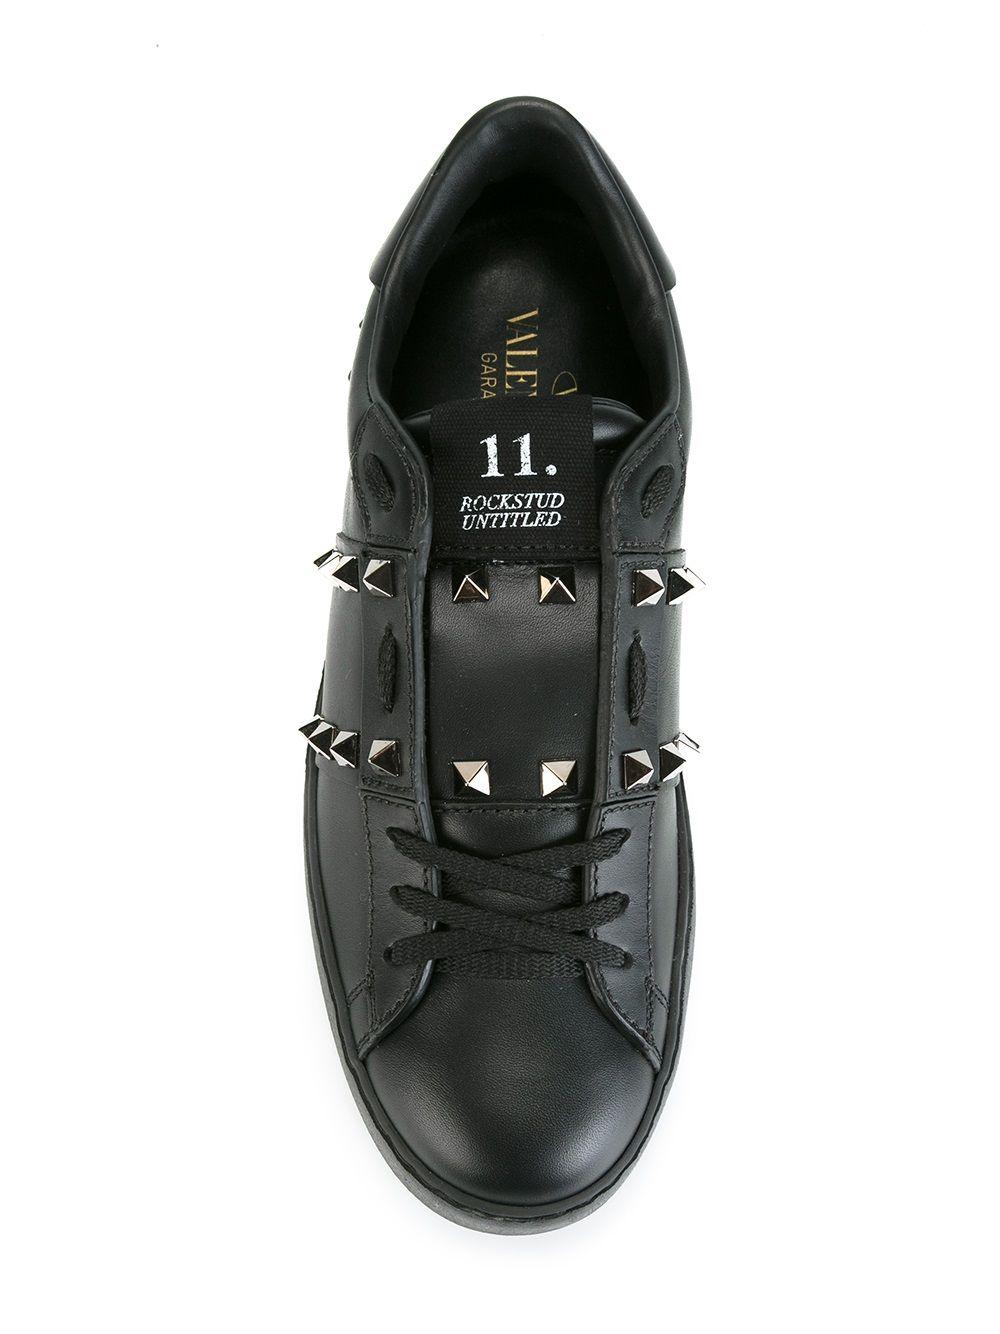 Valentino Garavani Rockstud Untitled Leather Sneakers in Black - Lyst